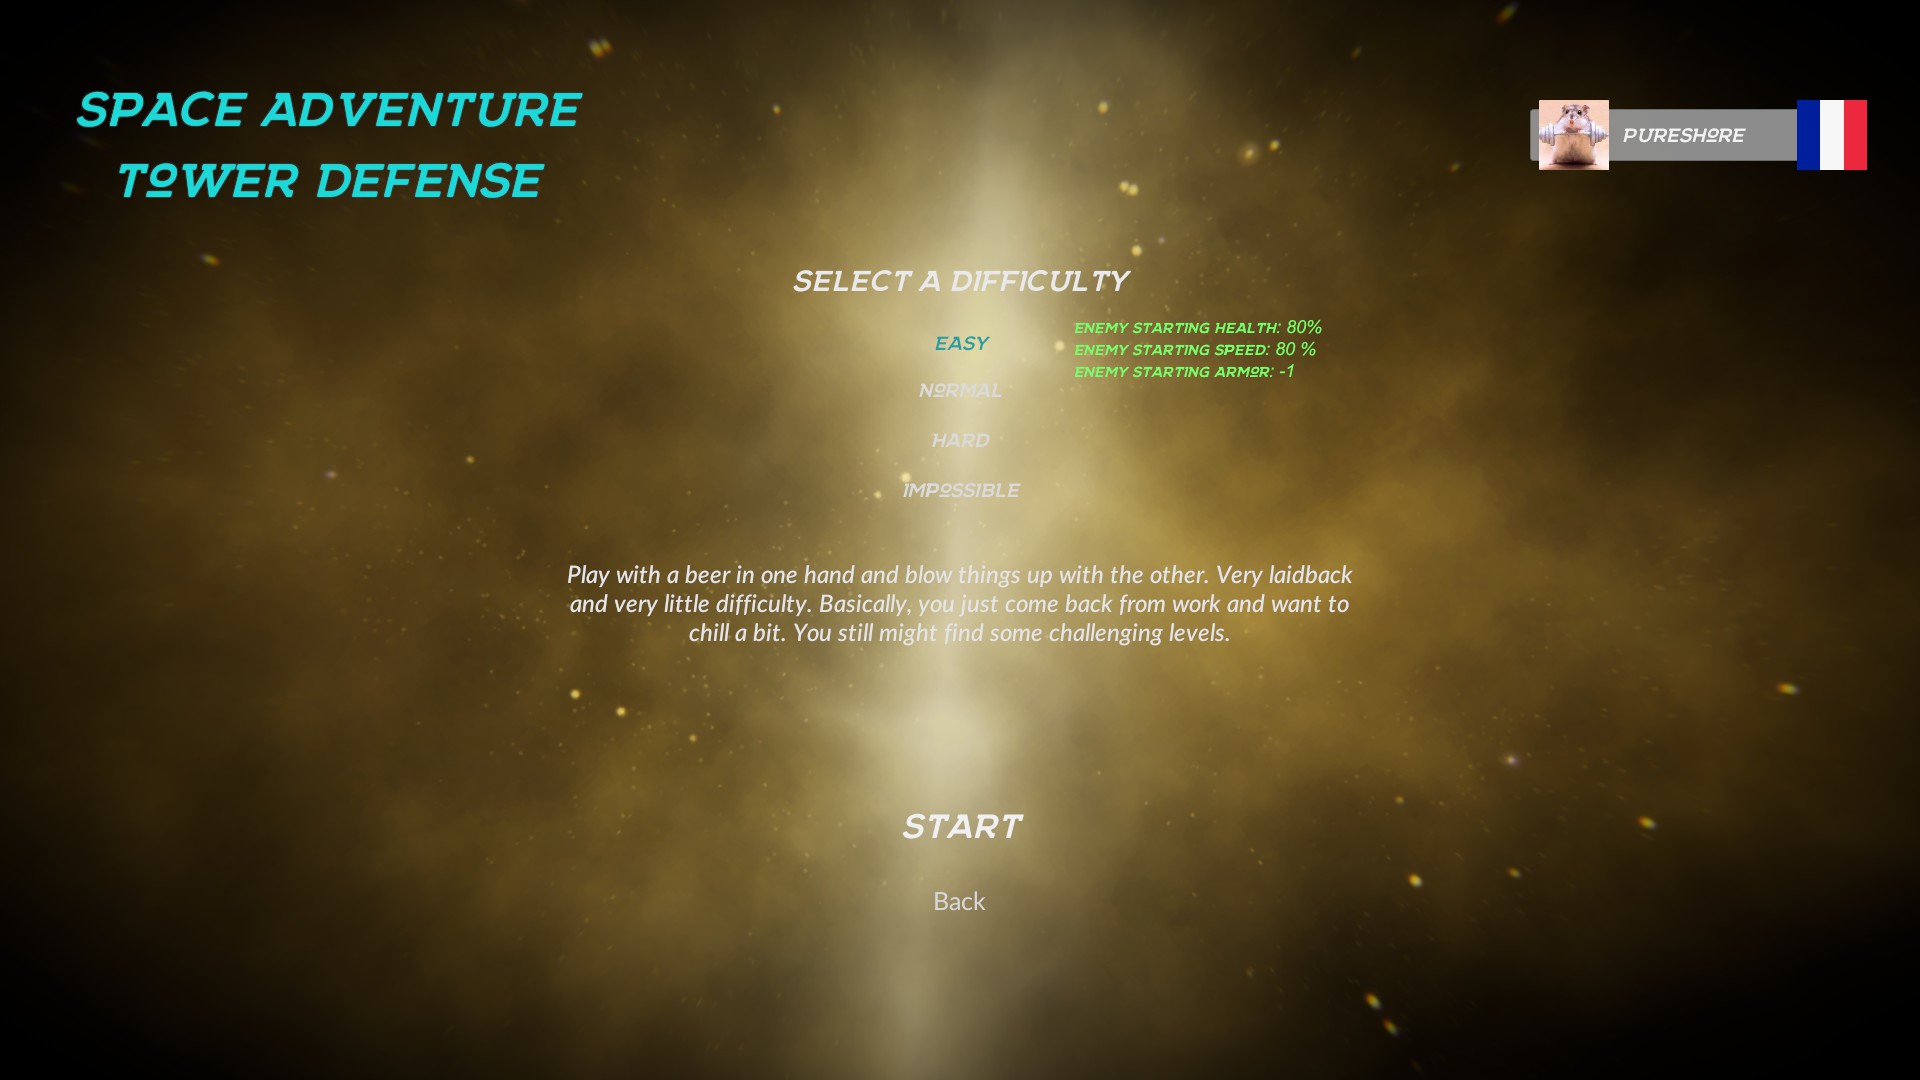 Space Adventure TD Demo Featured Screenshot #1